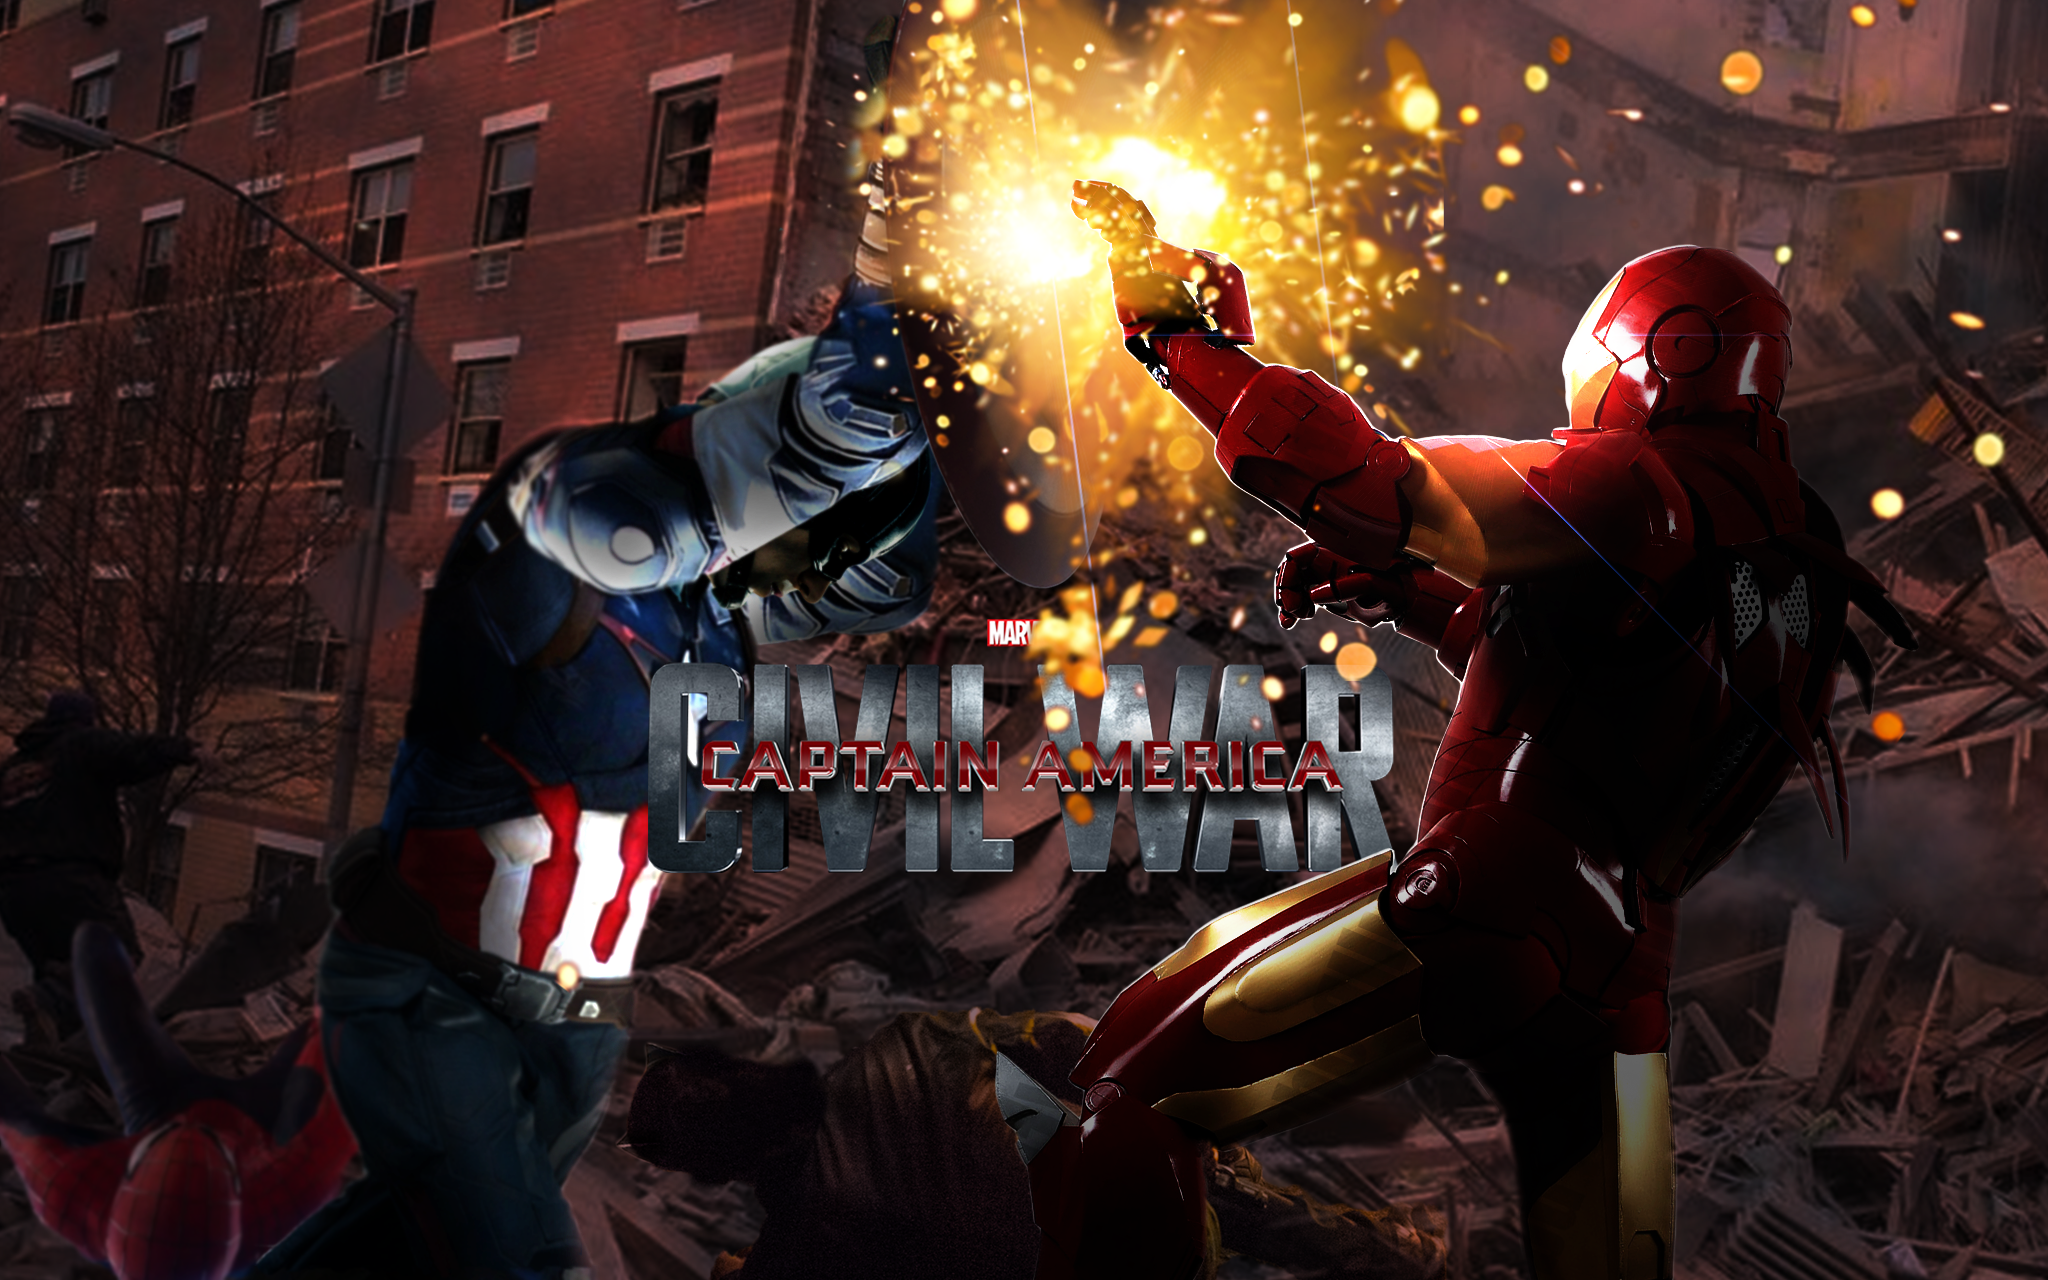 Captain America Vs Iron Man With Logo By TrevorPotter On DeviantArt